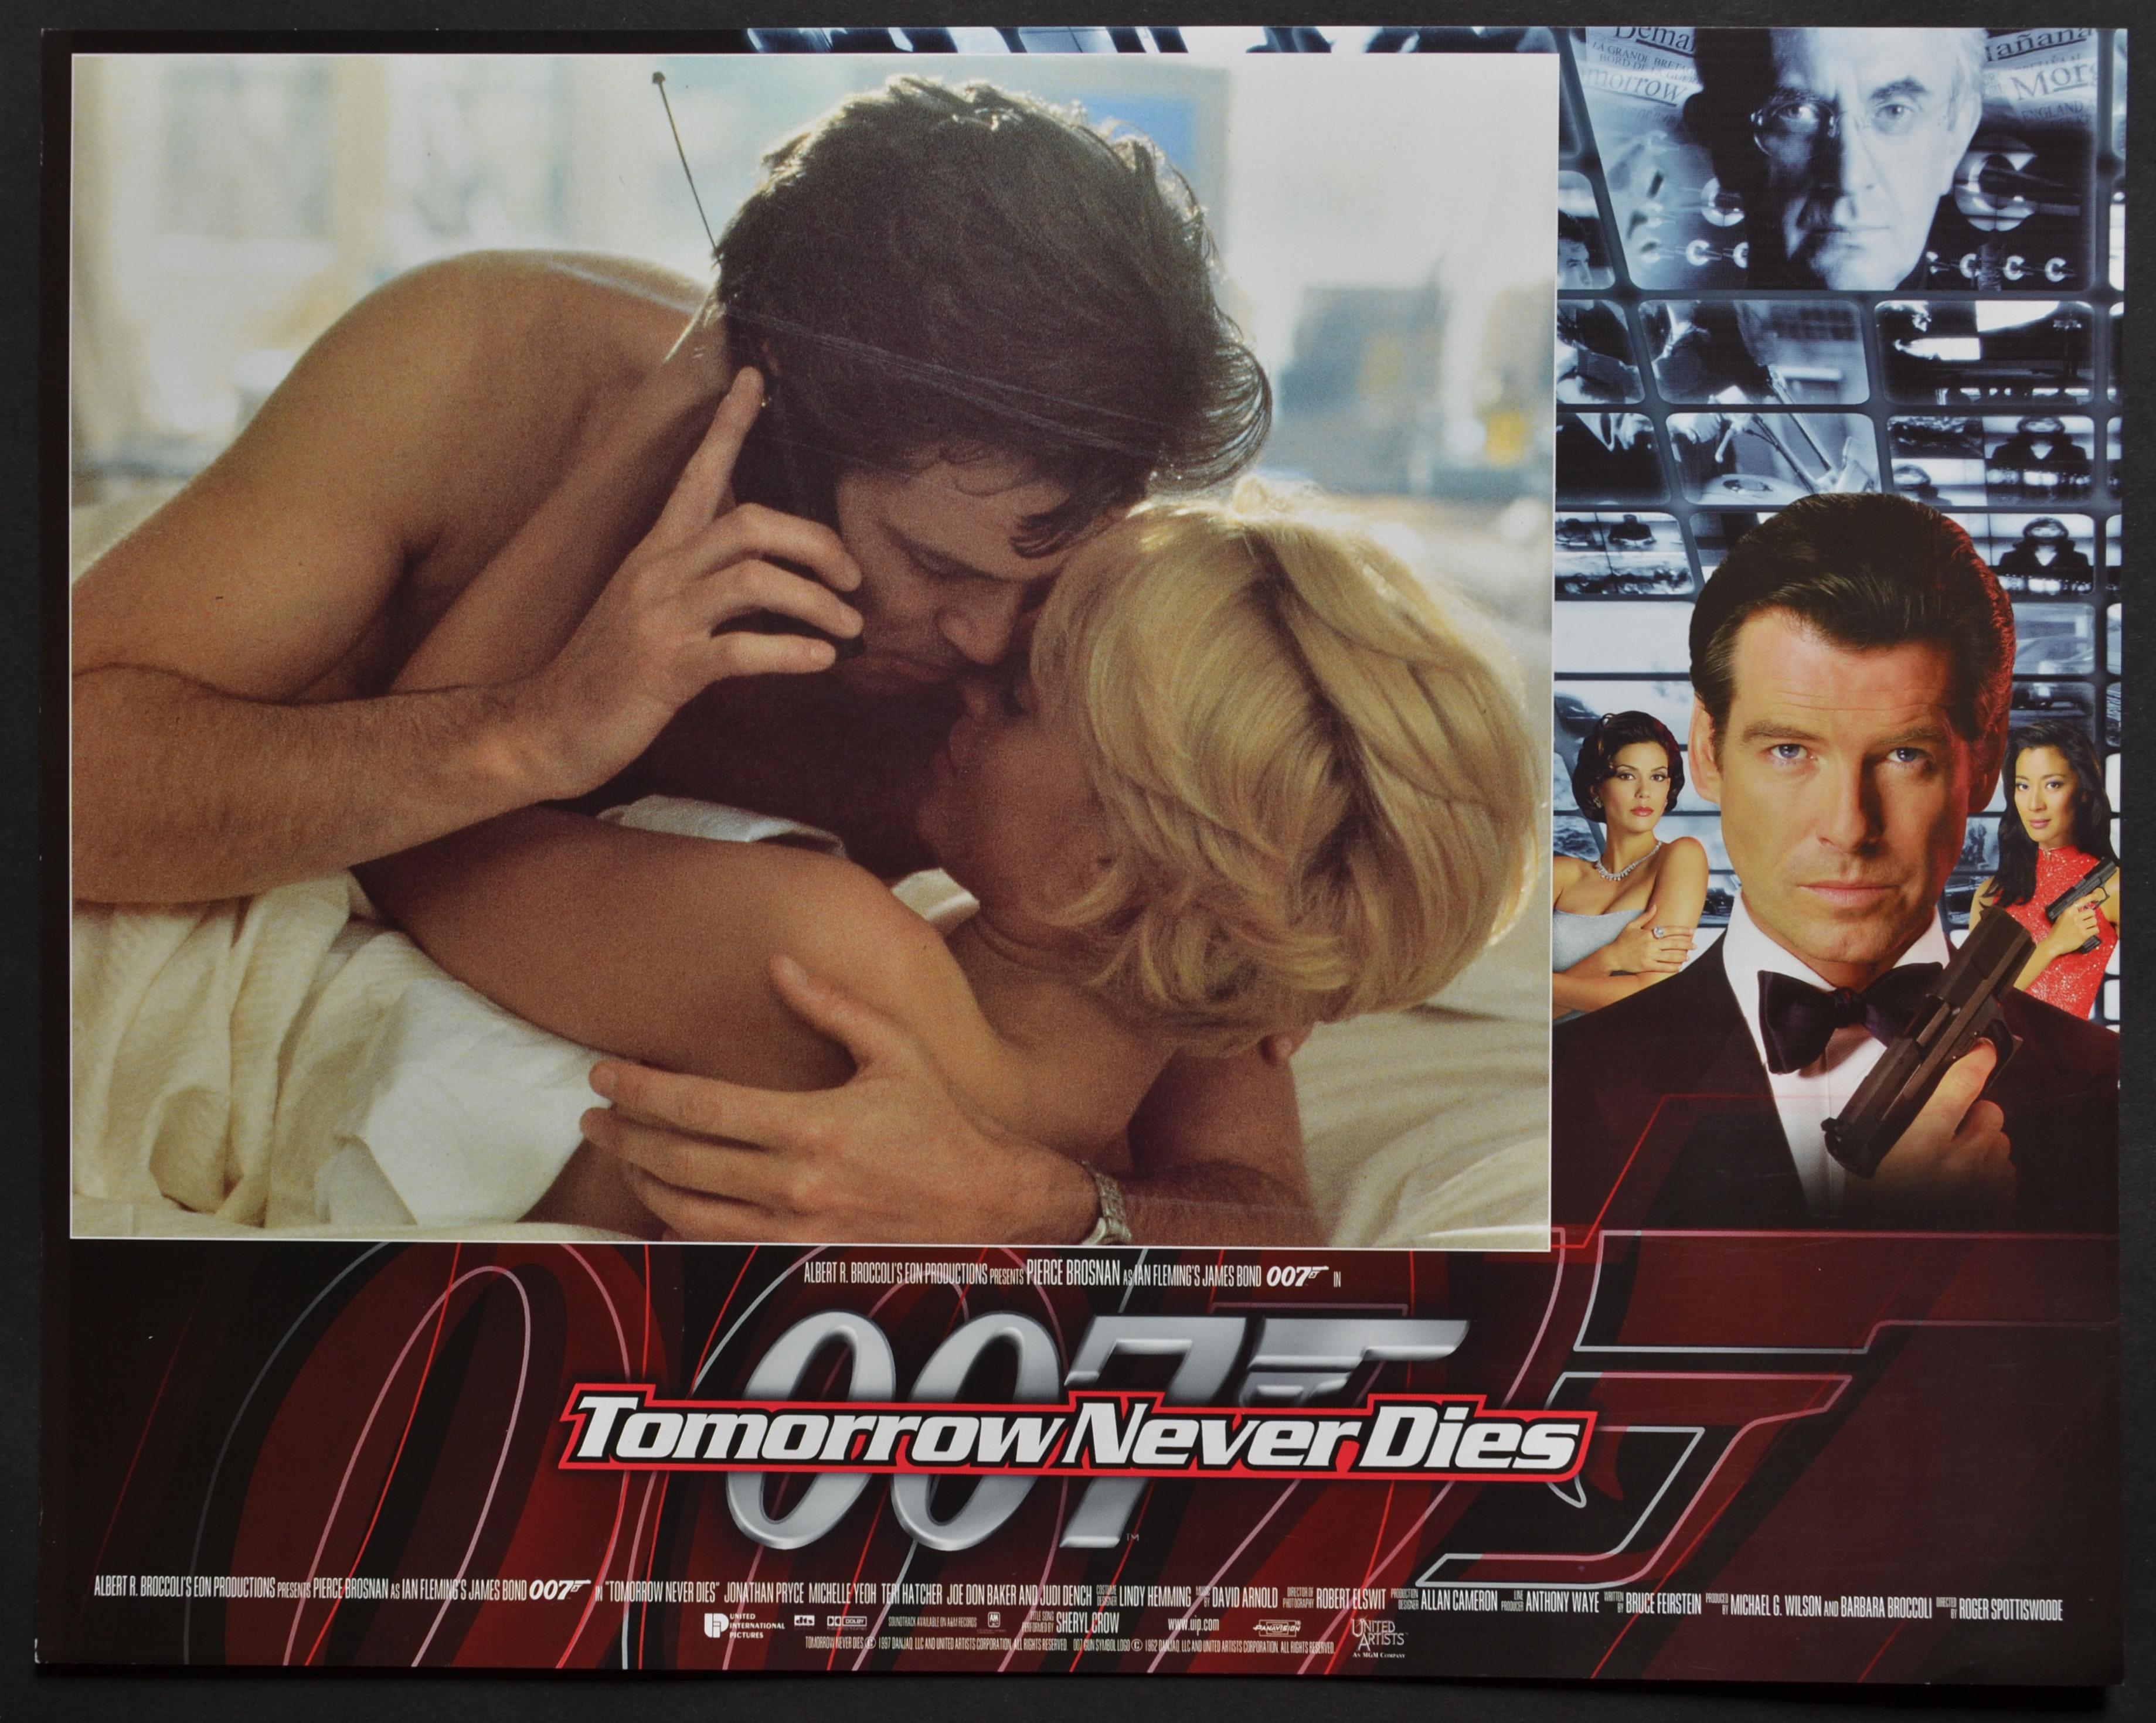 « James Bond 007 - Tomorrow never dies » - Carte de visite originale, Royaume-Uni, 1997